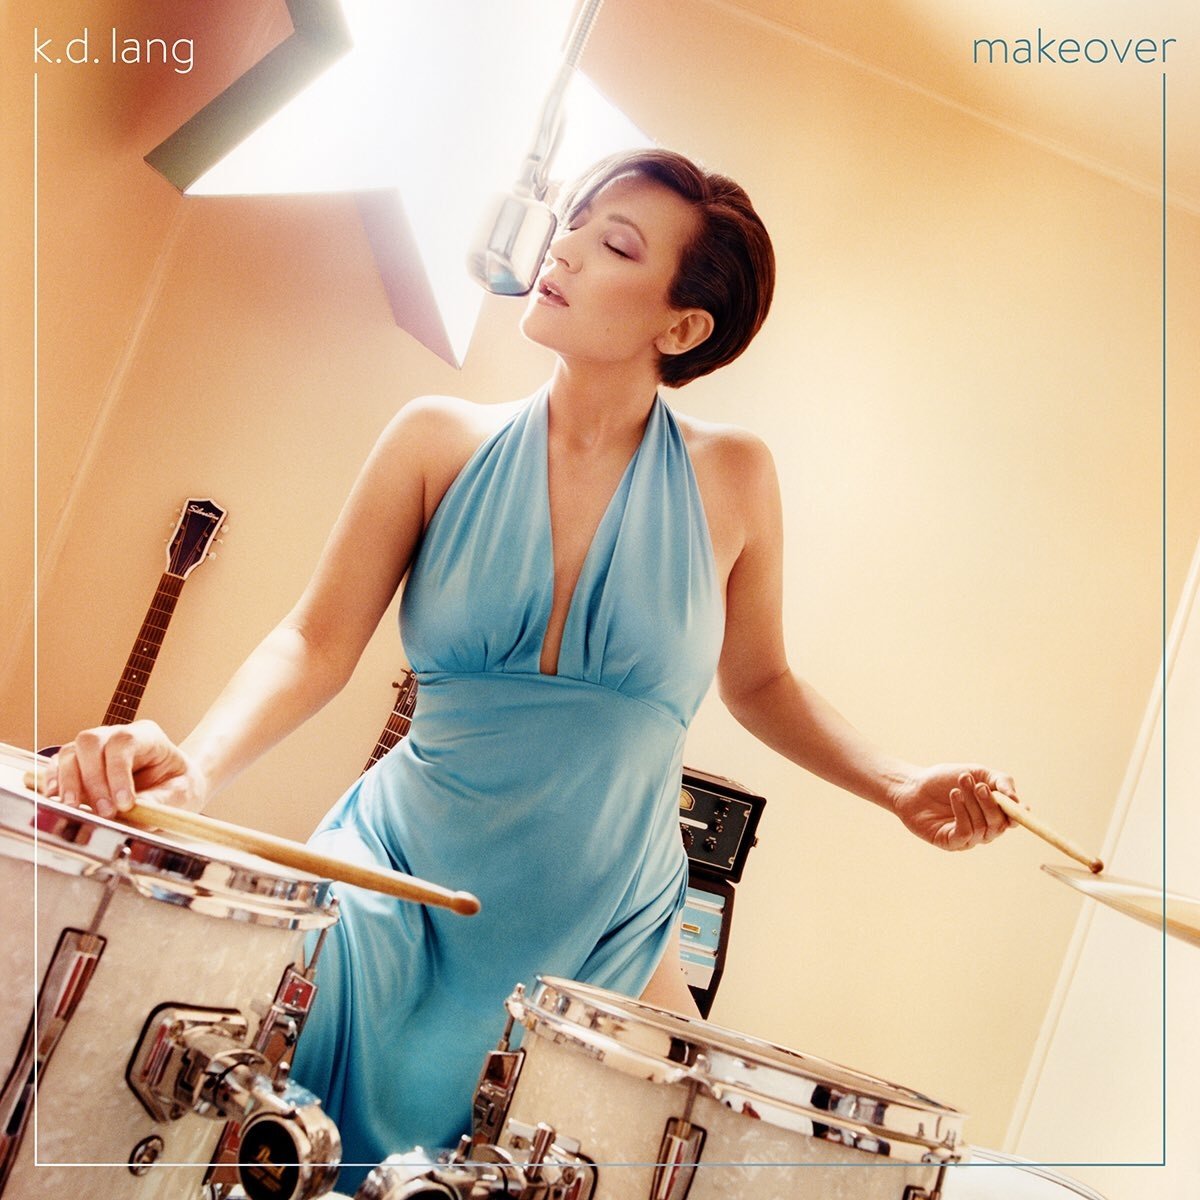 k.d. lang - Makeover (Translucent Turquoise Vinyl) - Pop Music